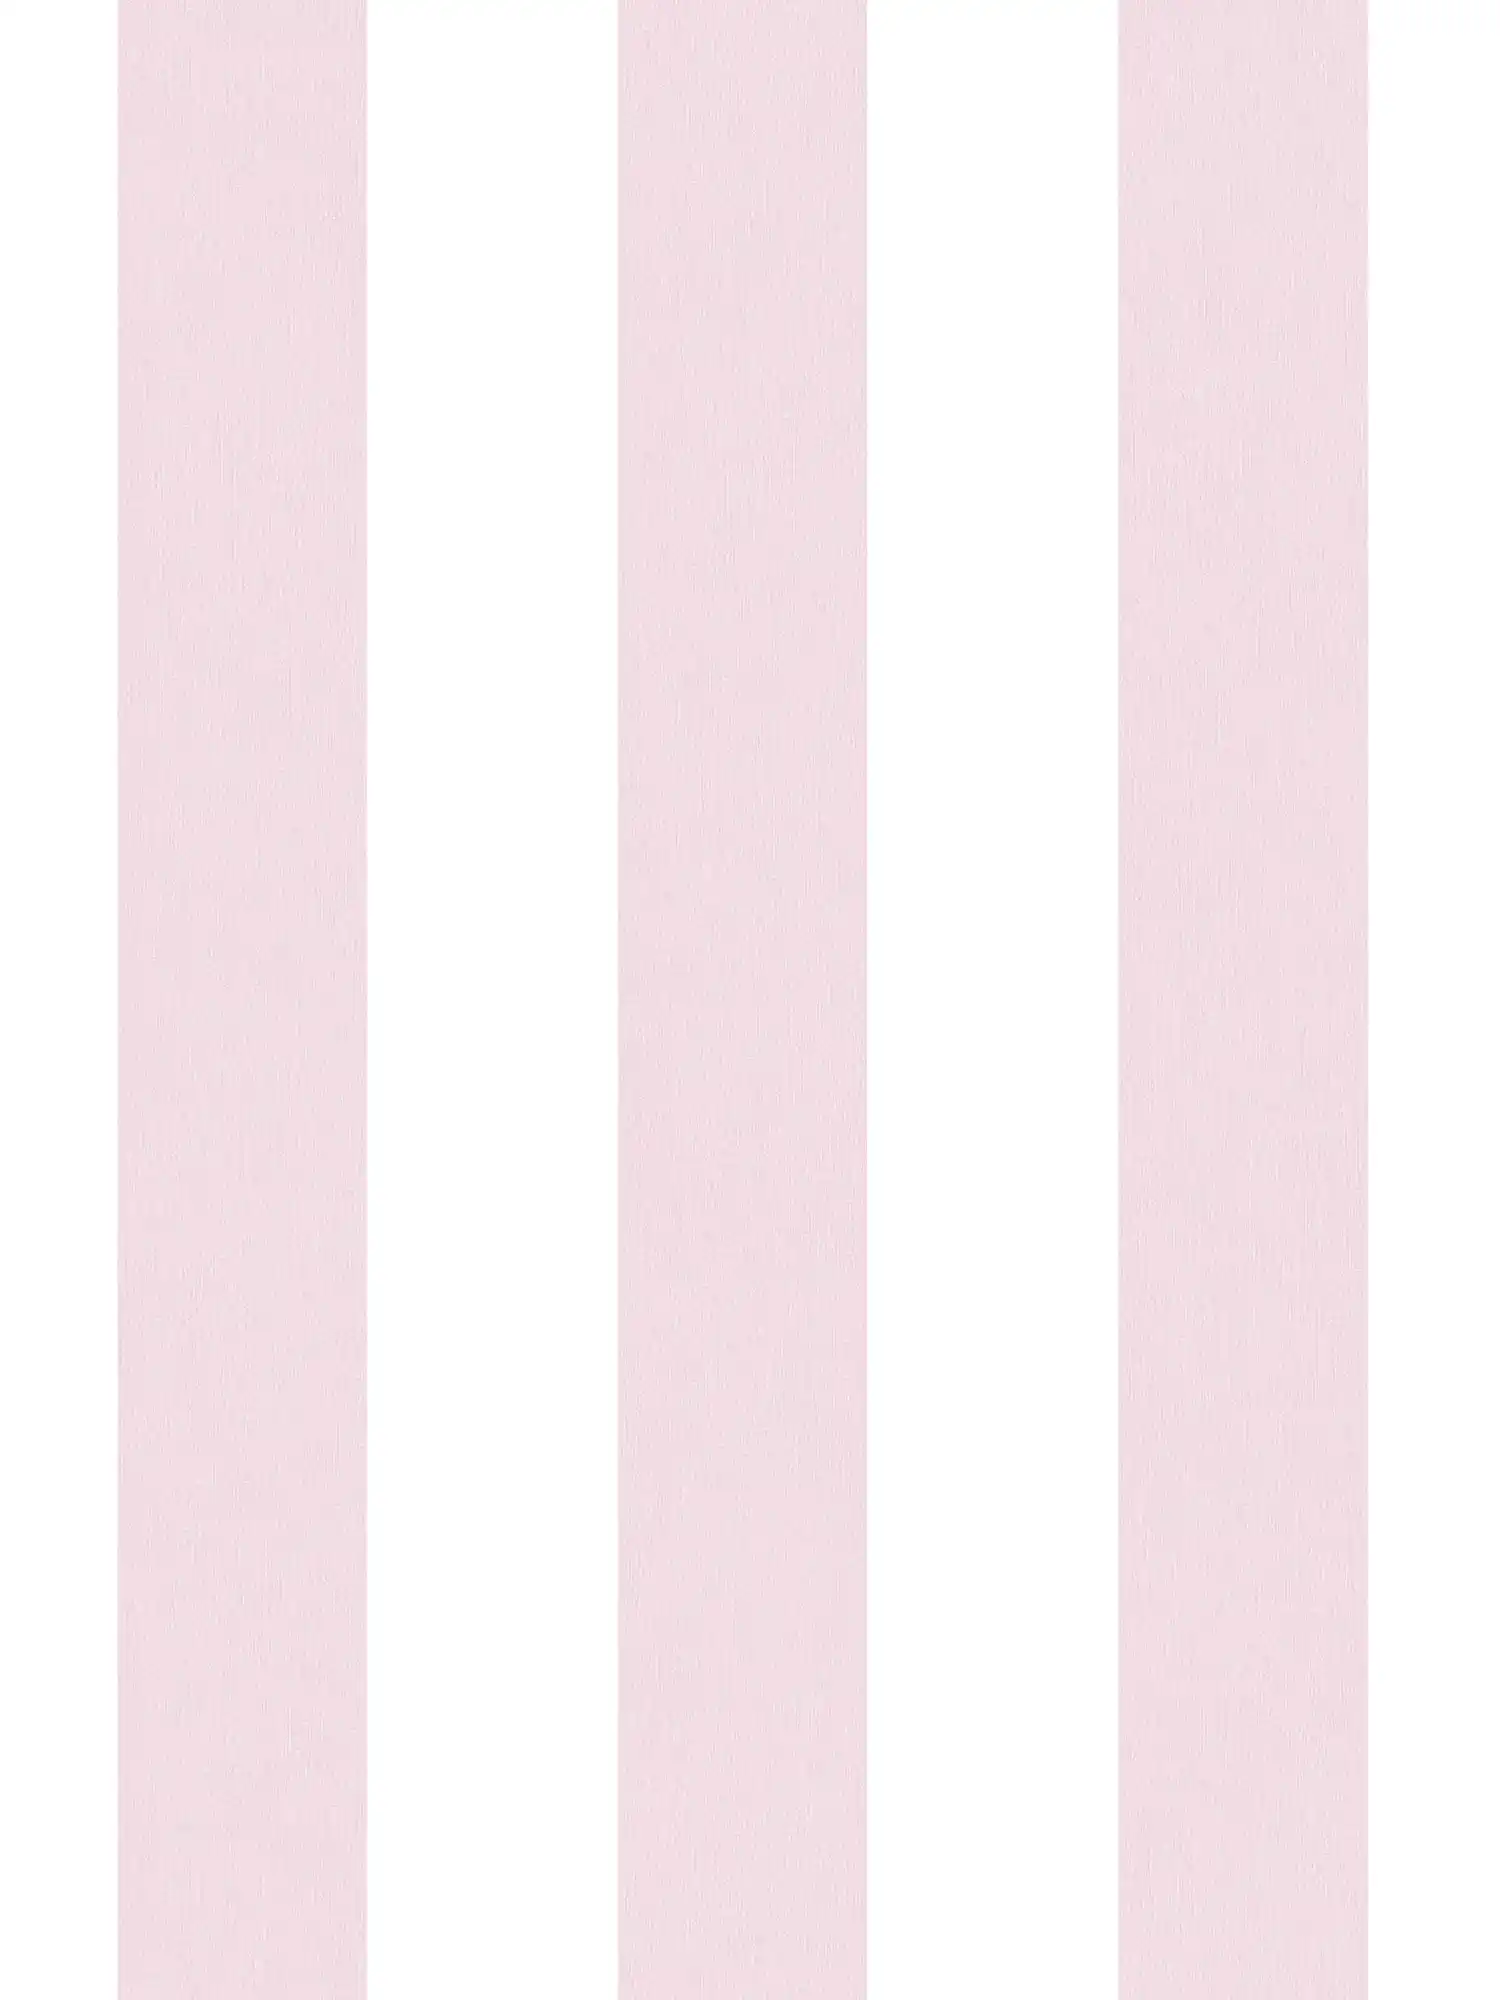 Nursery girls wallpaper stripes vertical - pink, white
